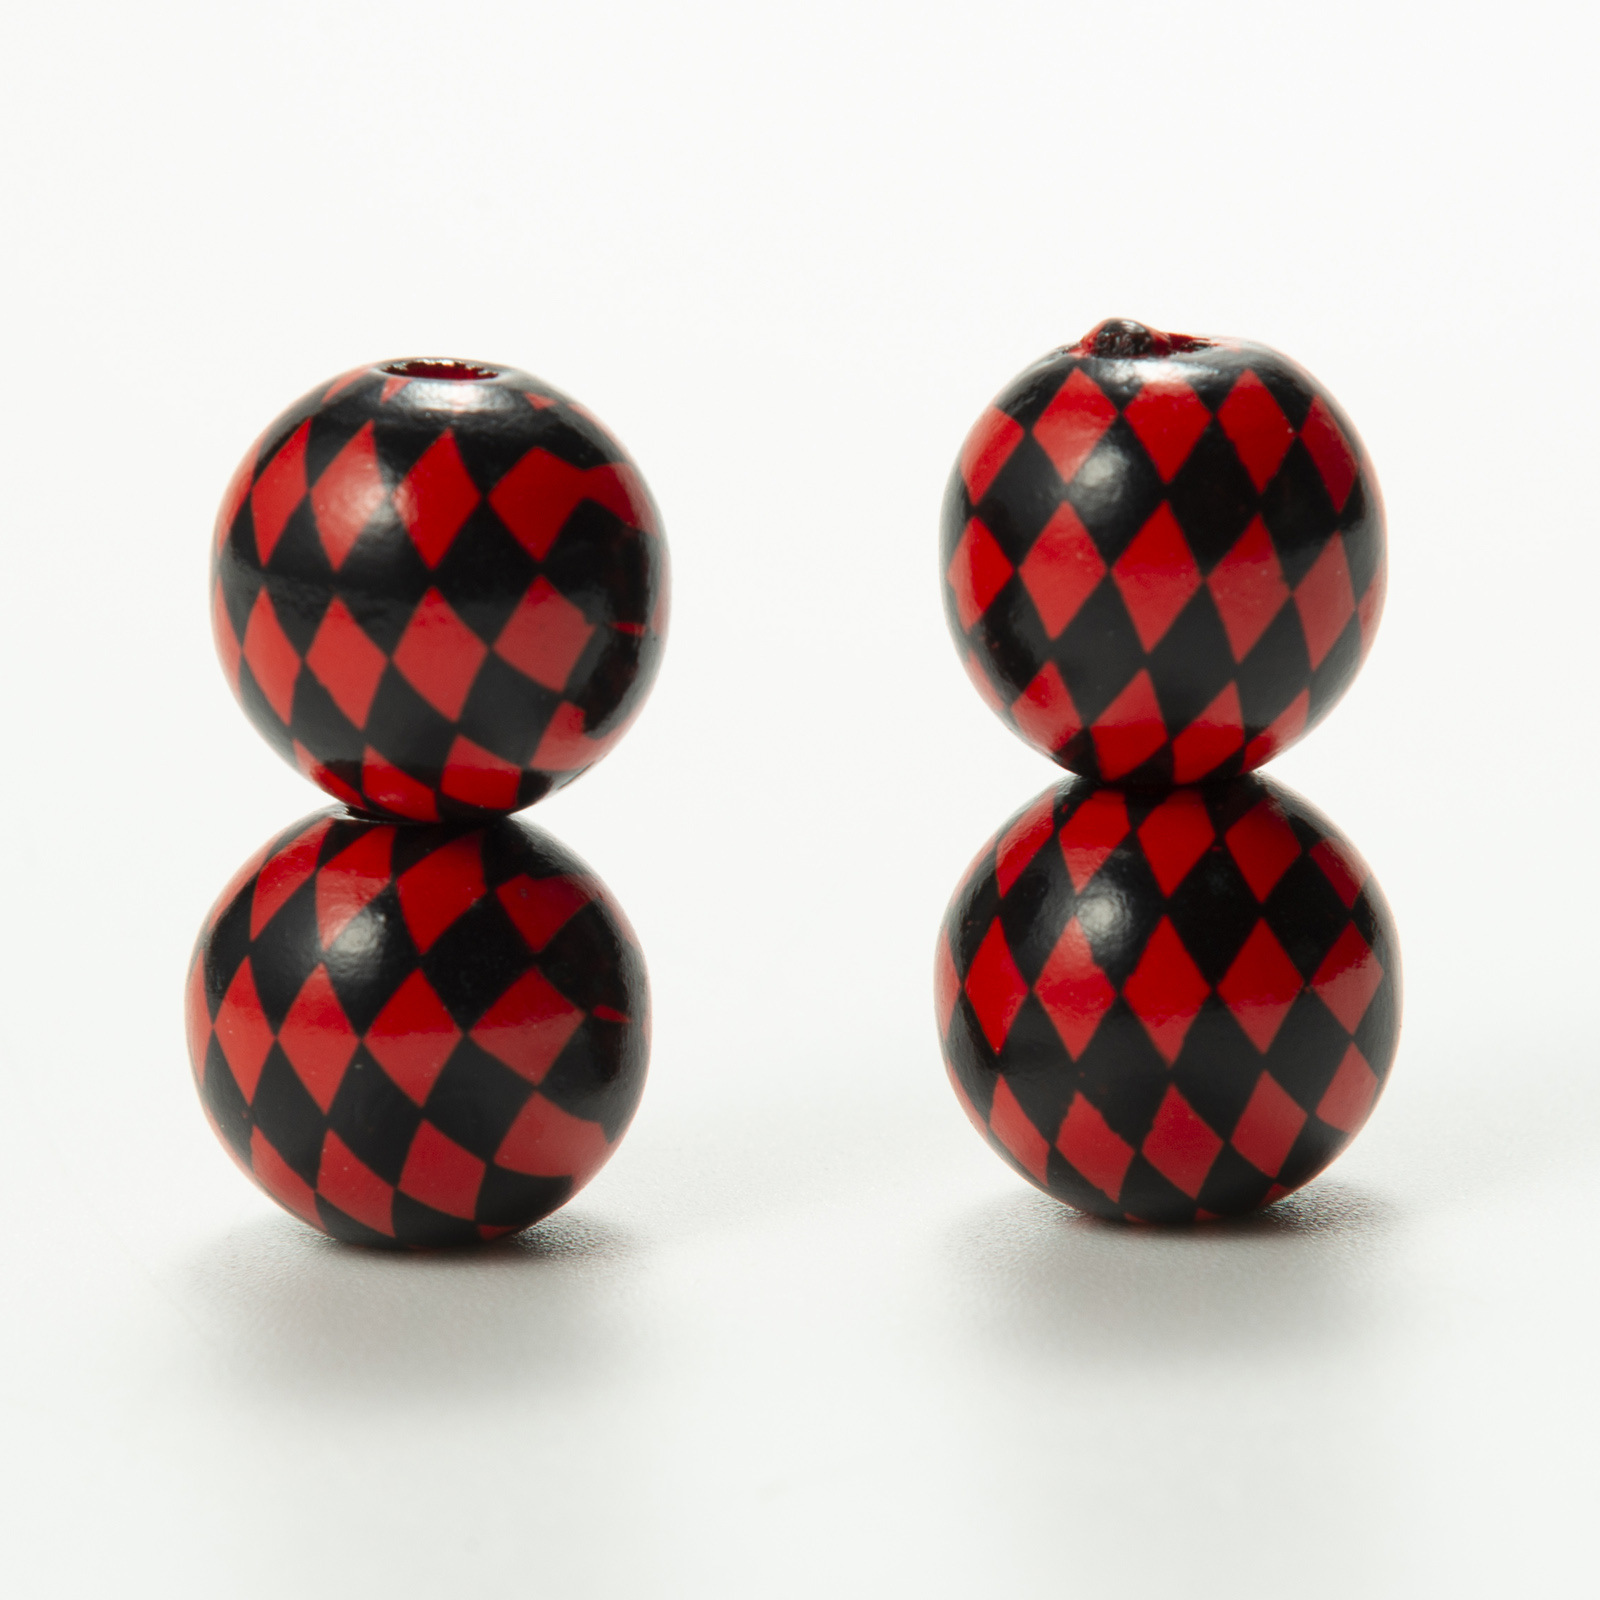 2:Red and black diamond beads